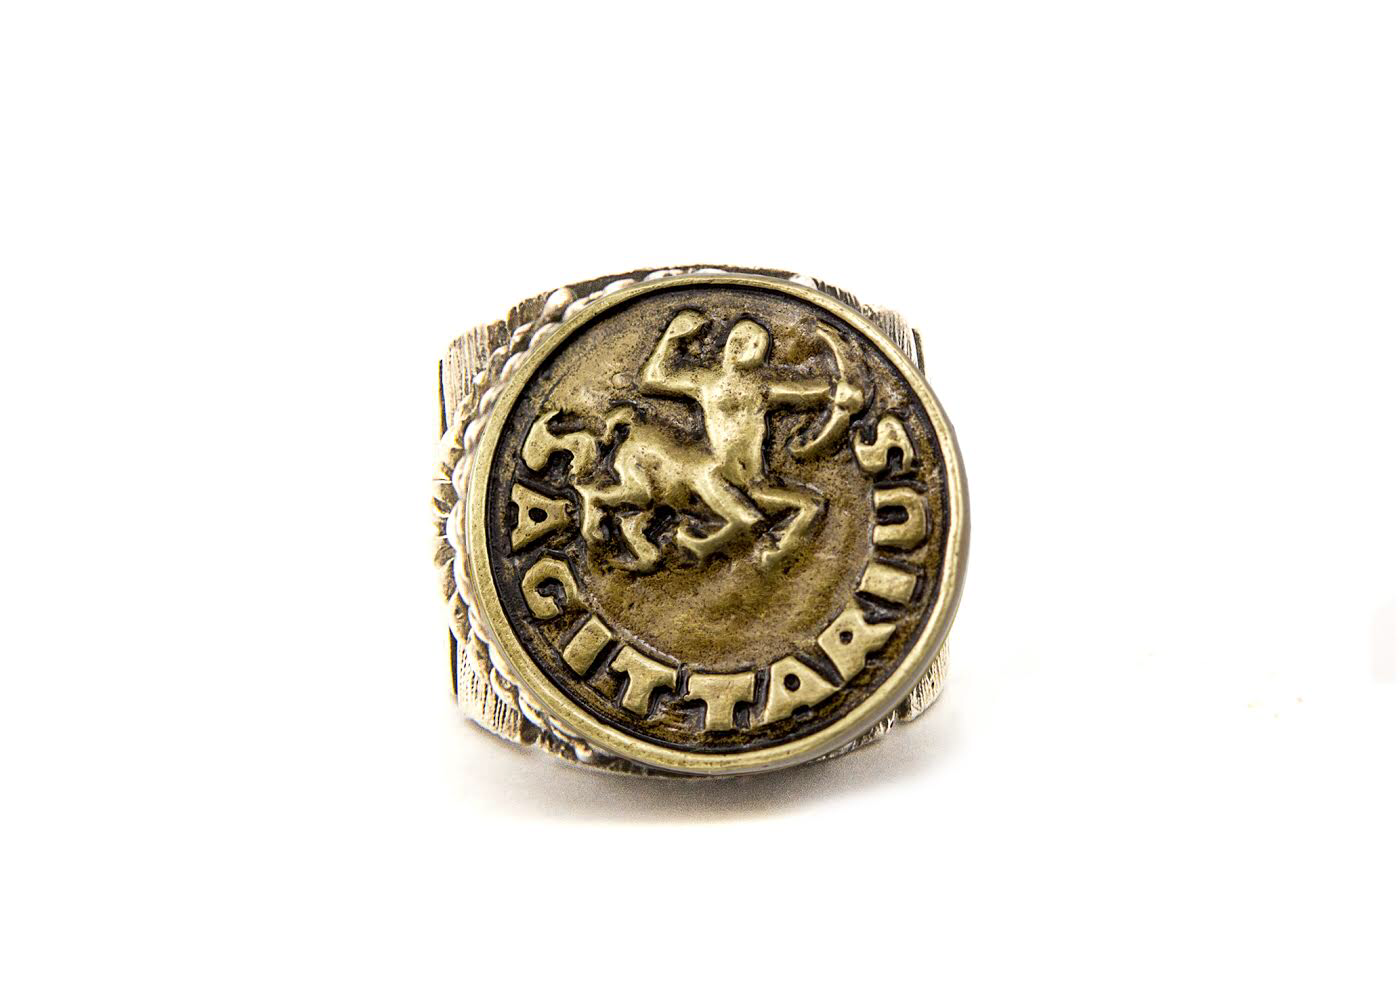 SAGITTARIUS Zodiac Silver Ring, Sagittarius Birthday Gift, Silver Sagittarius Horoscope Ring, Astrology Ring, Silver Signet Ring, Coin Ring